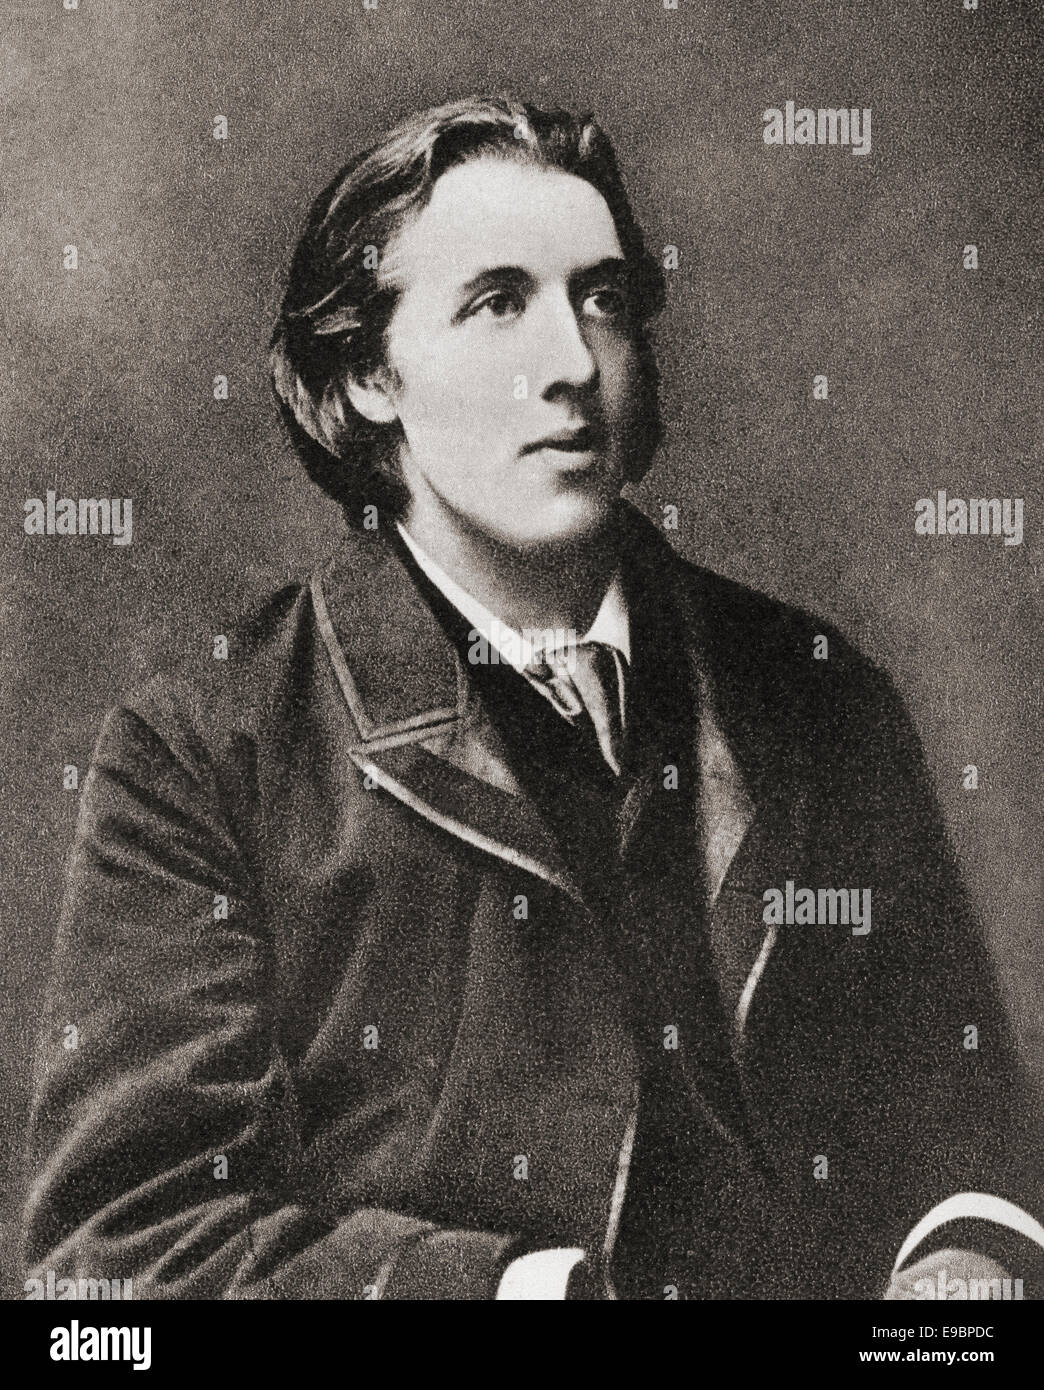 Oscar Wilde, during his aesthetic period.  Oscar Fingal O'Flahertie Wills Wilde, 1854 – 1900.  Irish writer and poet. Stock Photo